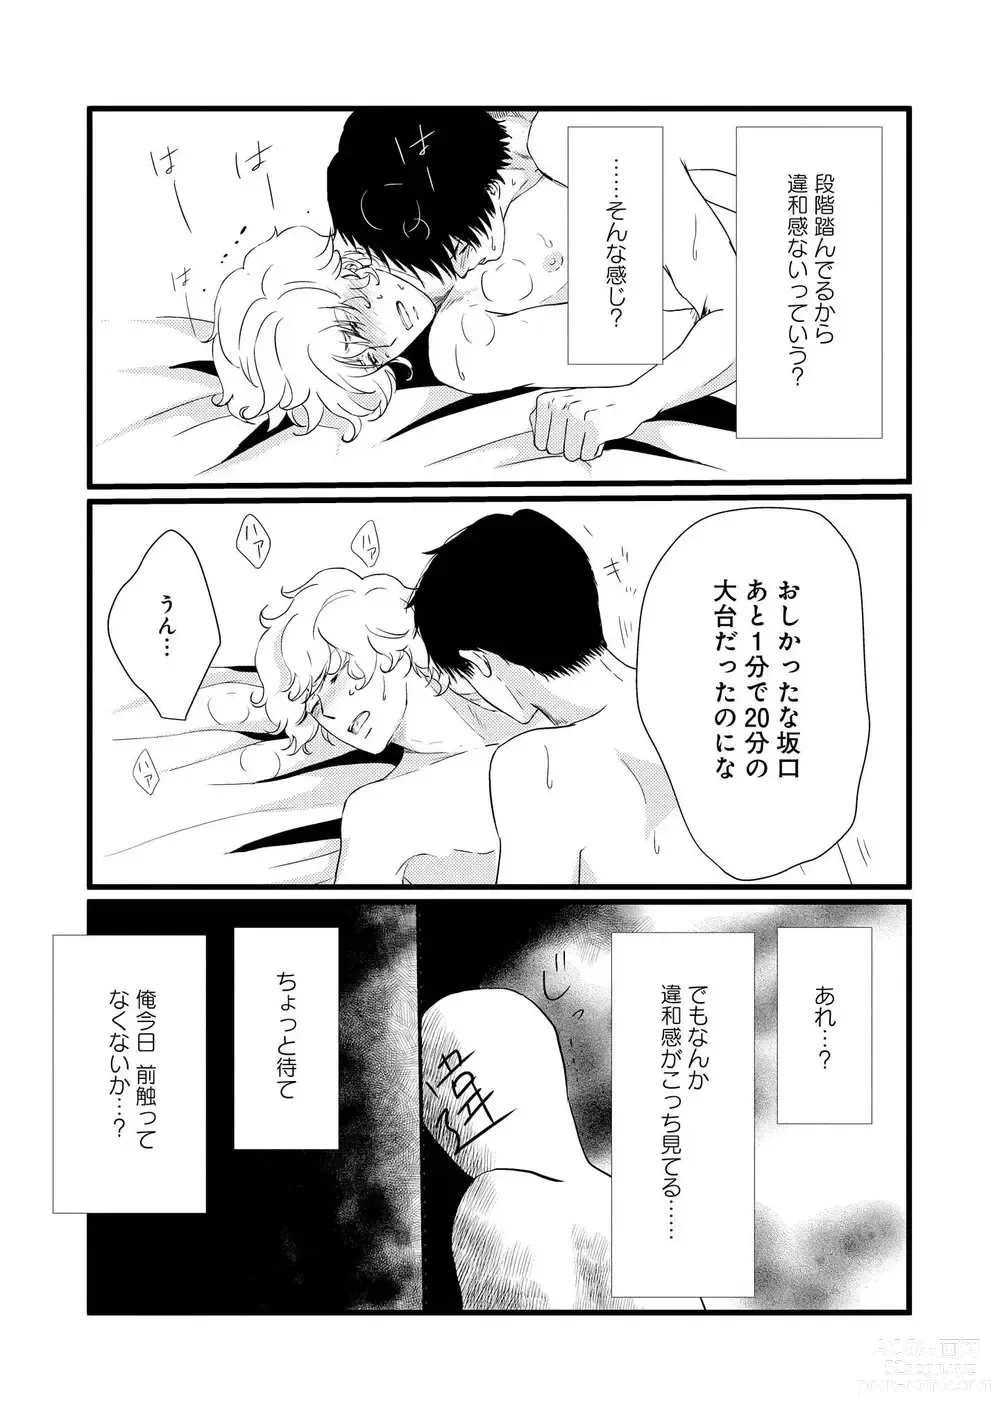 Page 13 of manga AHOERO